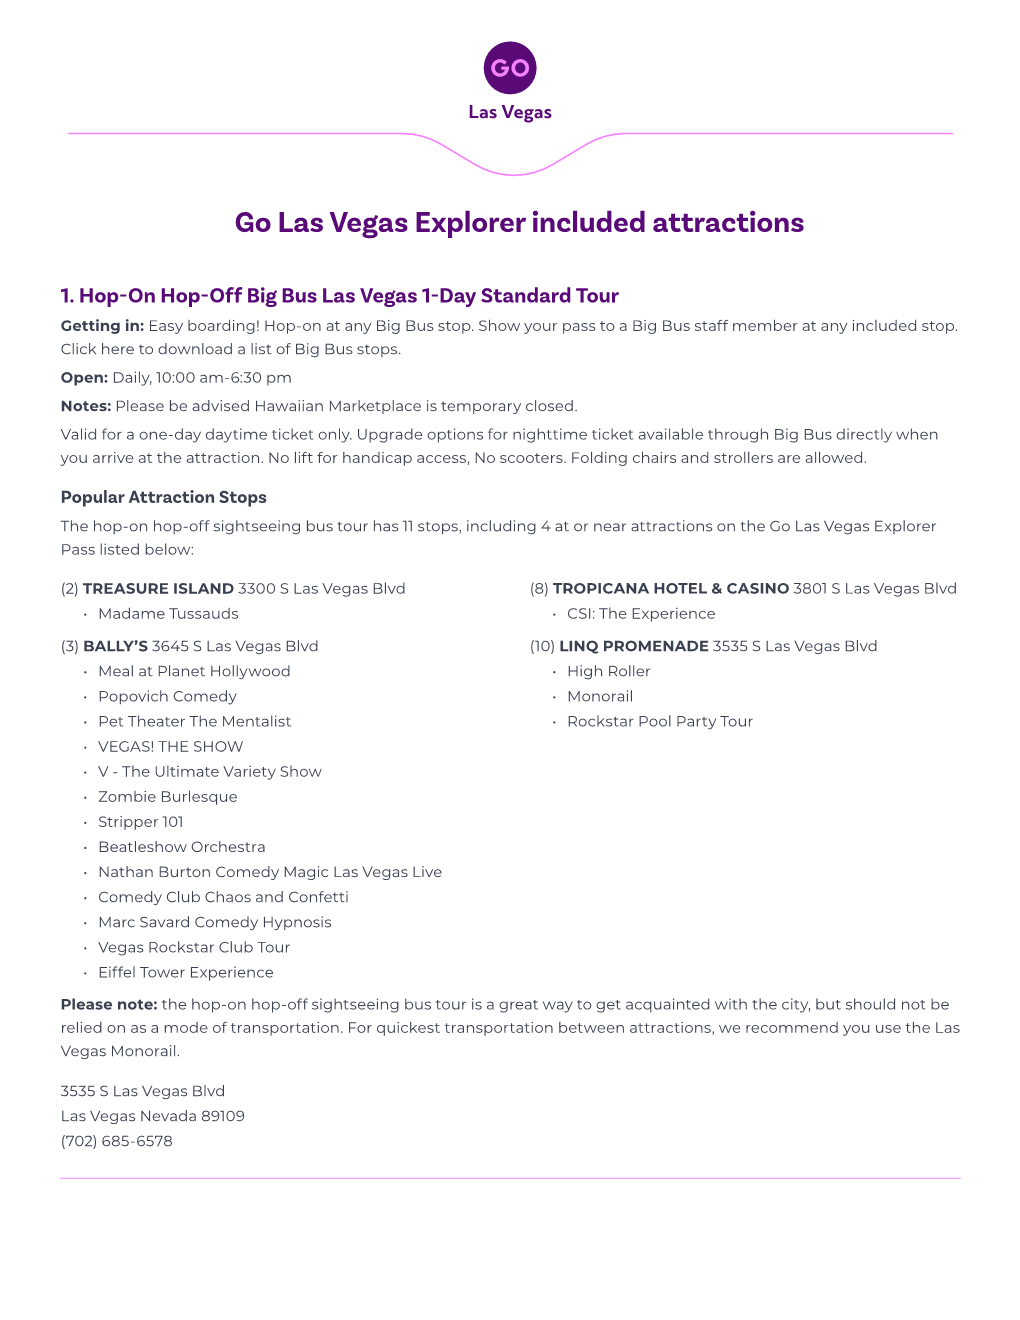 Go Las Vegas Explorer Included Attractions